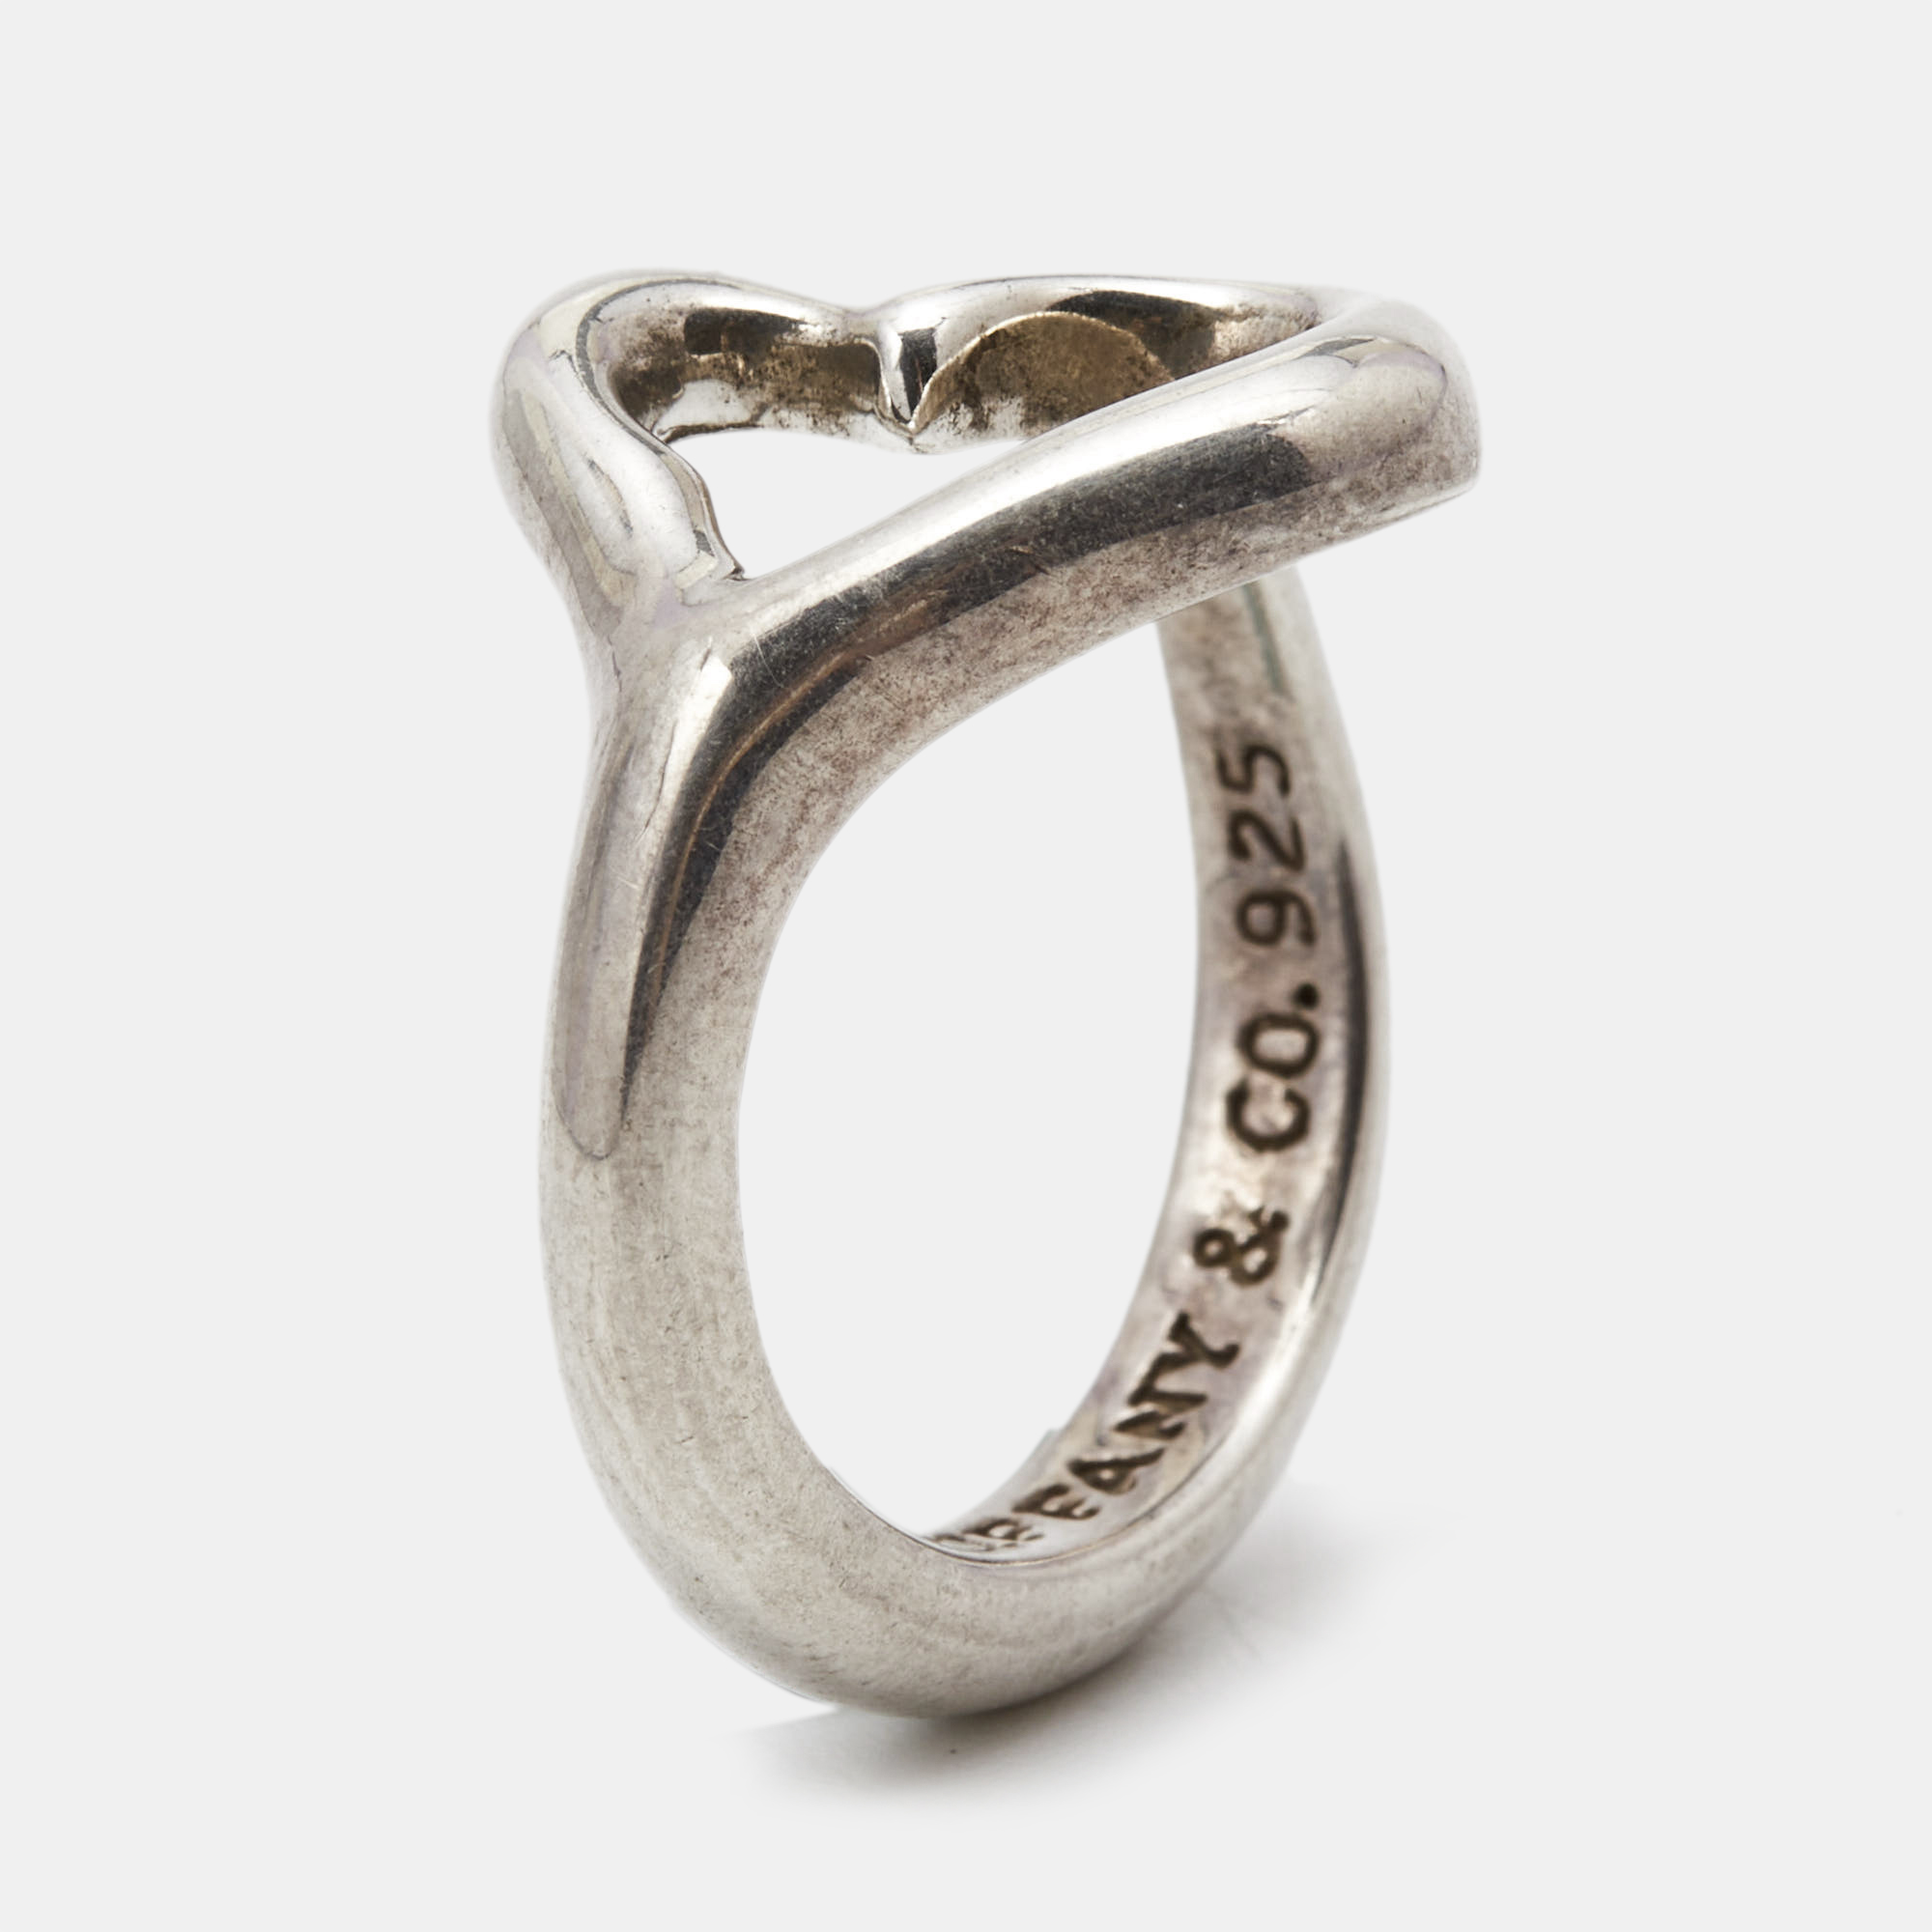 Tiffany & Co. Elsa Peretti Open Heart Sterling Silver Ring Size 52